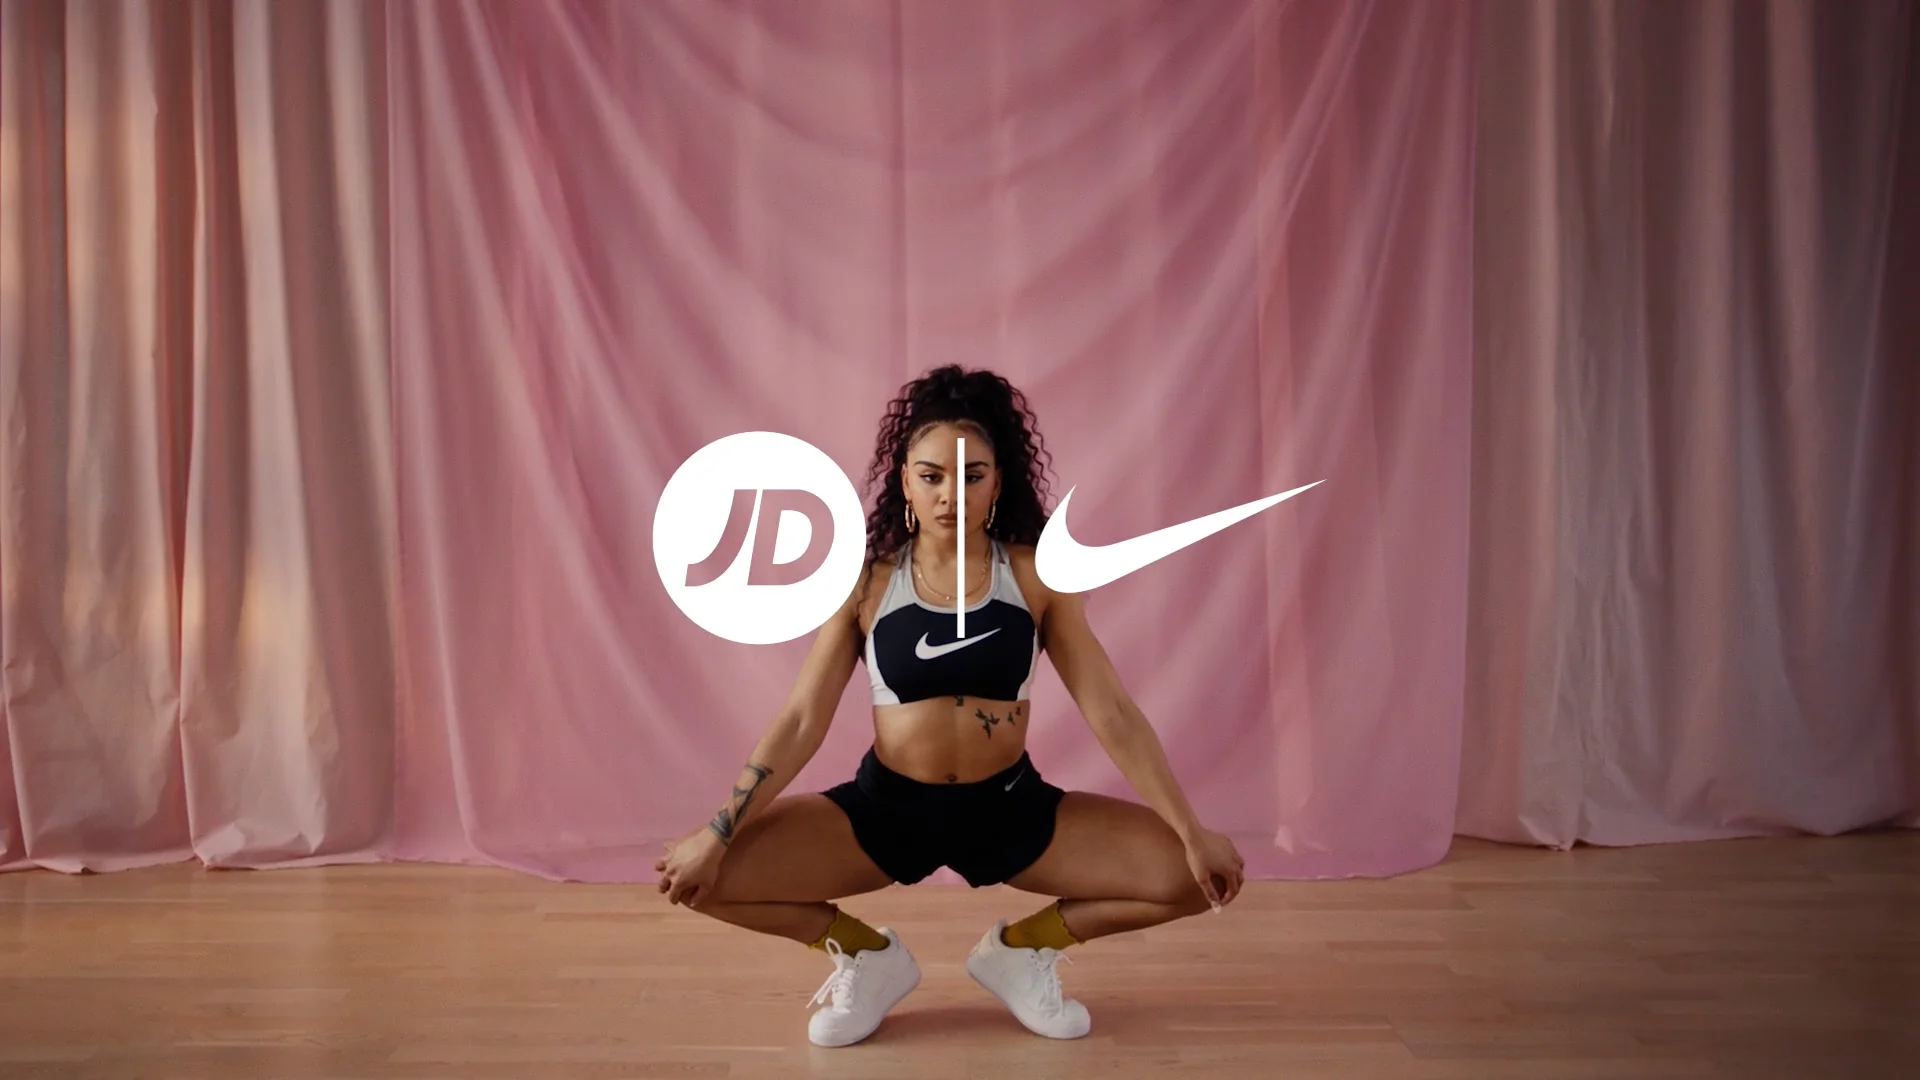 Nike X JD Sports Bra Shoppable Video on Vimeo